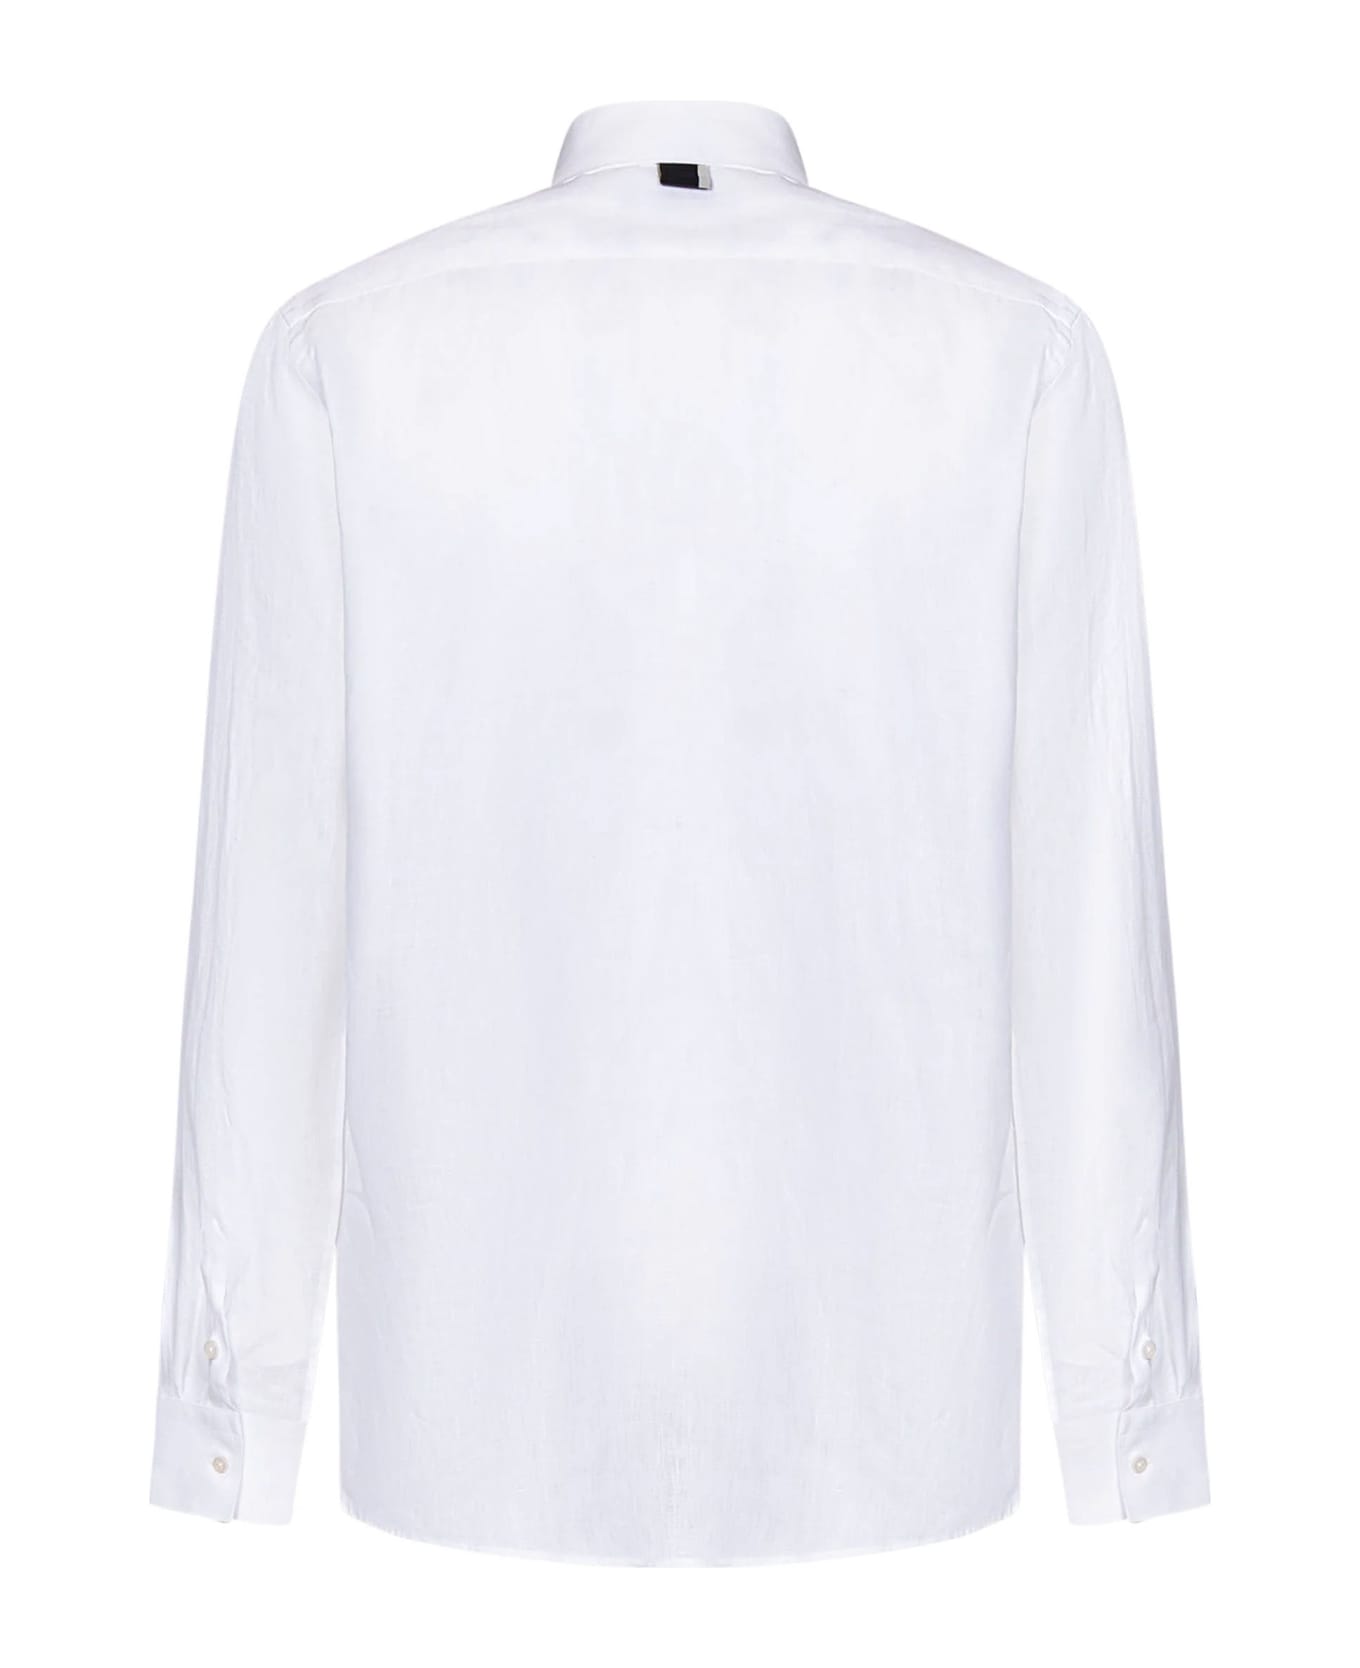 Low Brand Shirts White - White シャツ